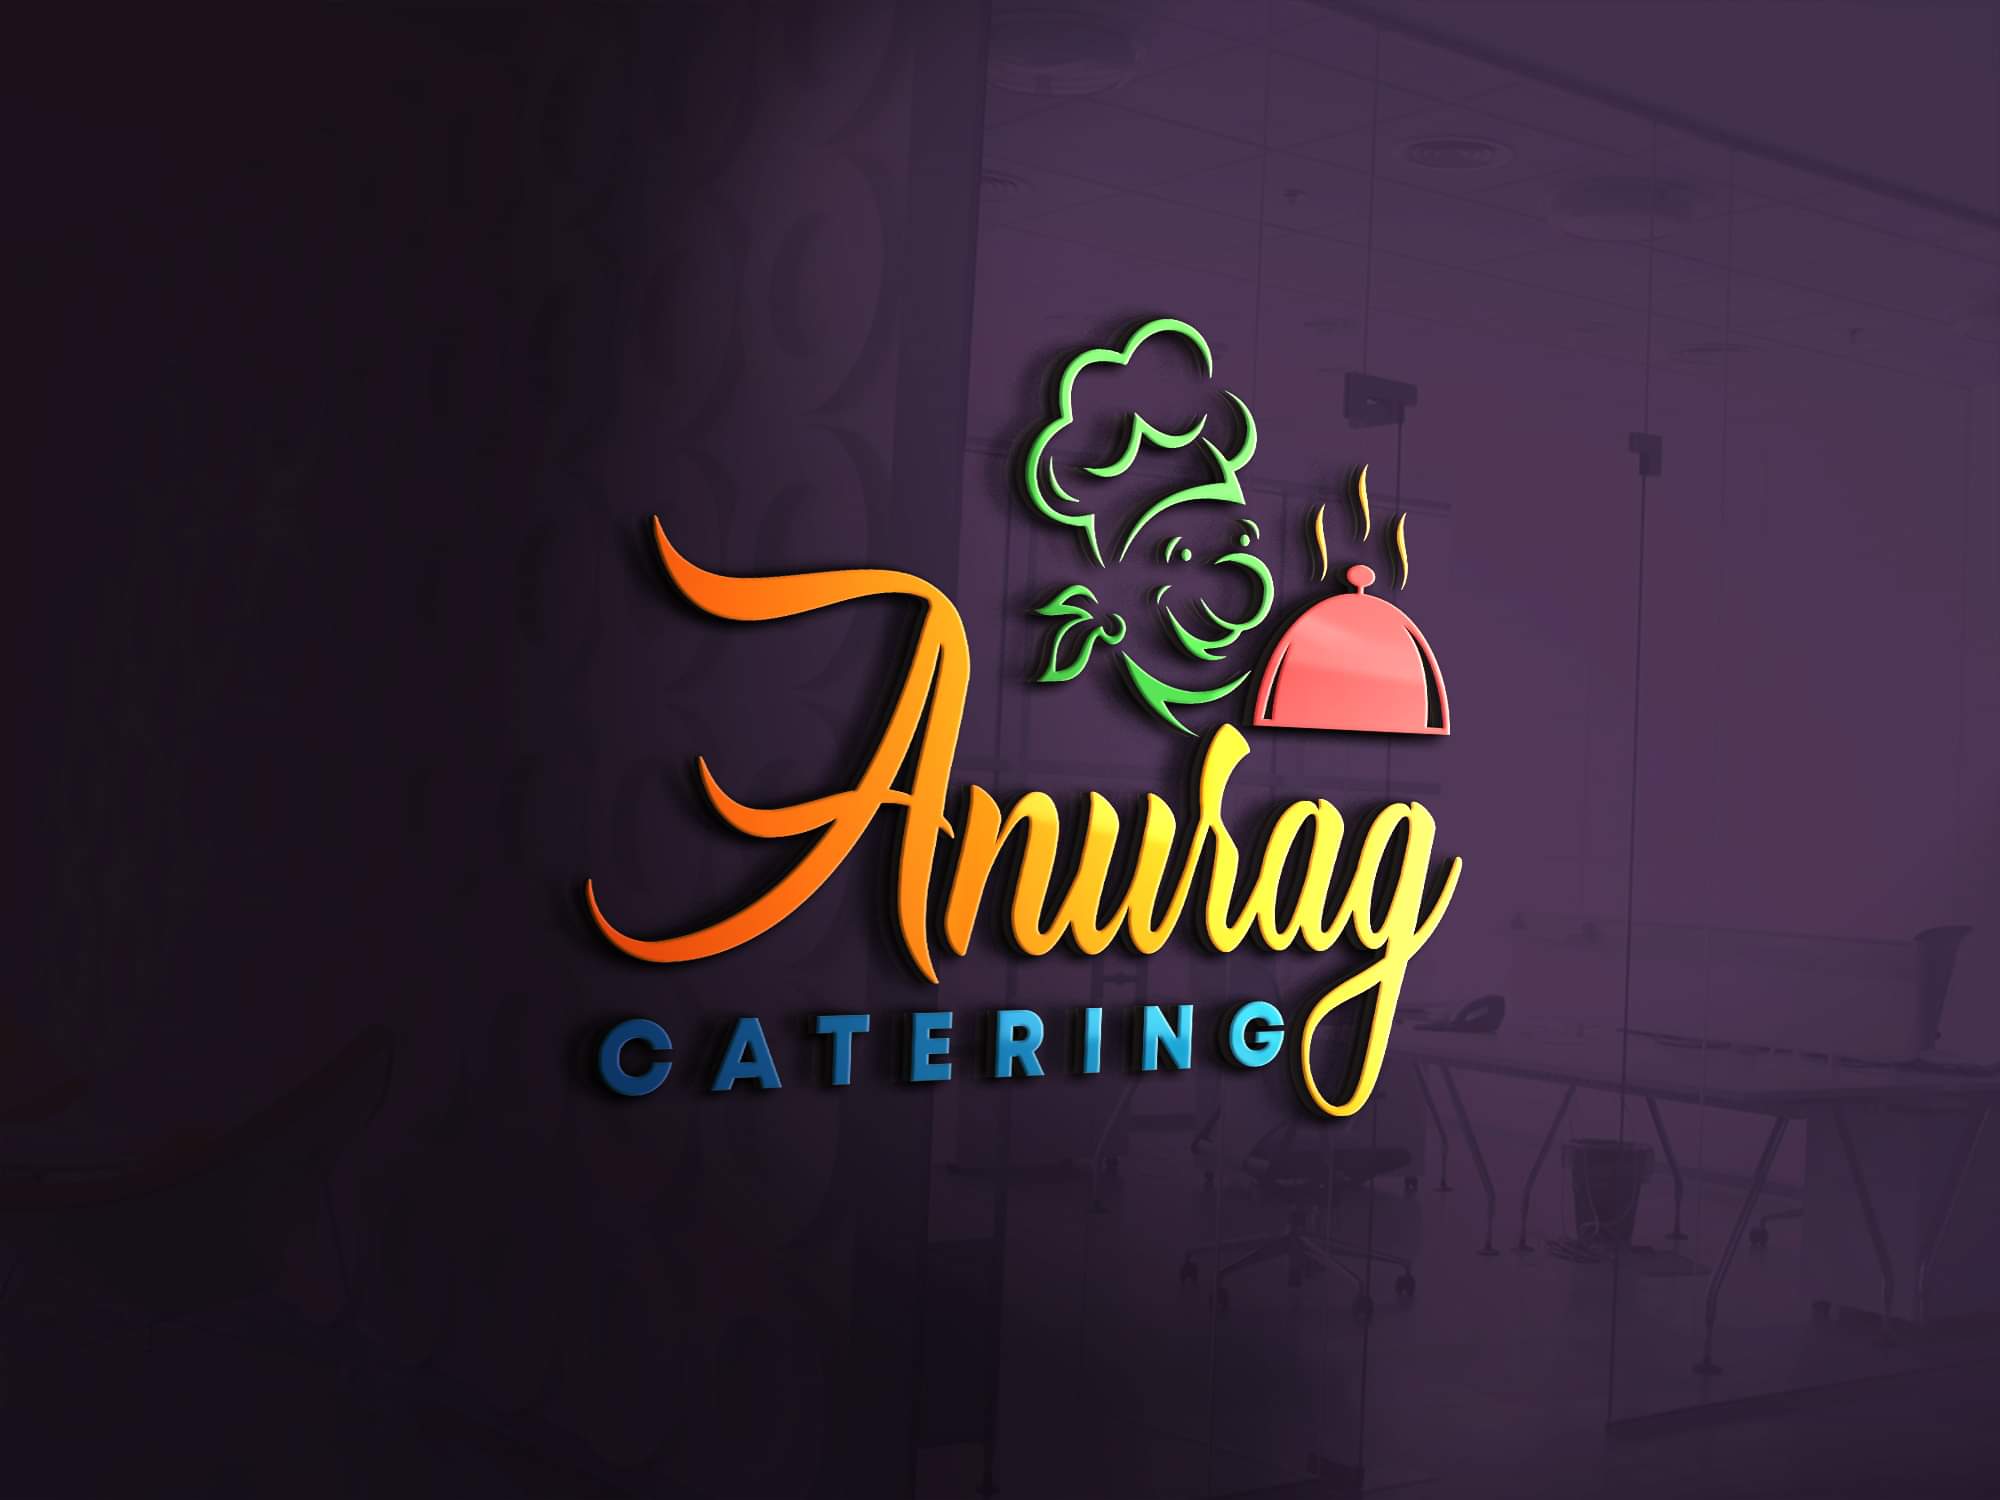 Anurag catring - Logo